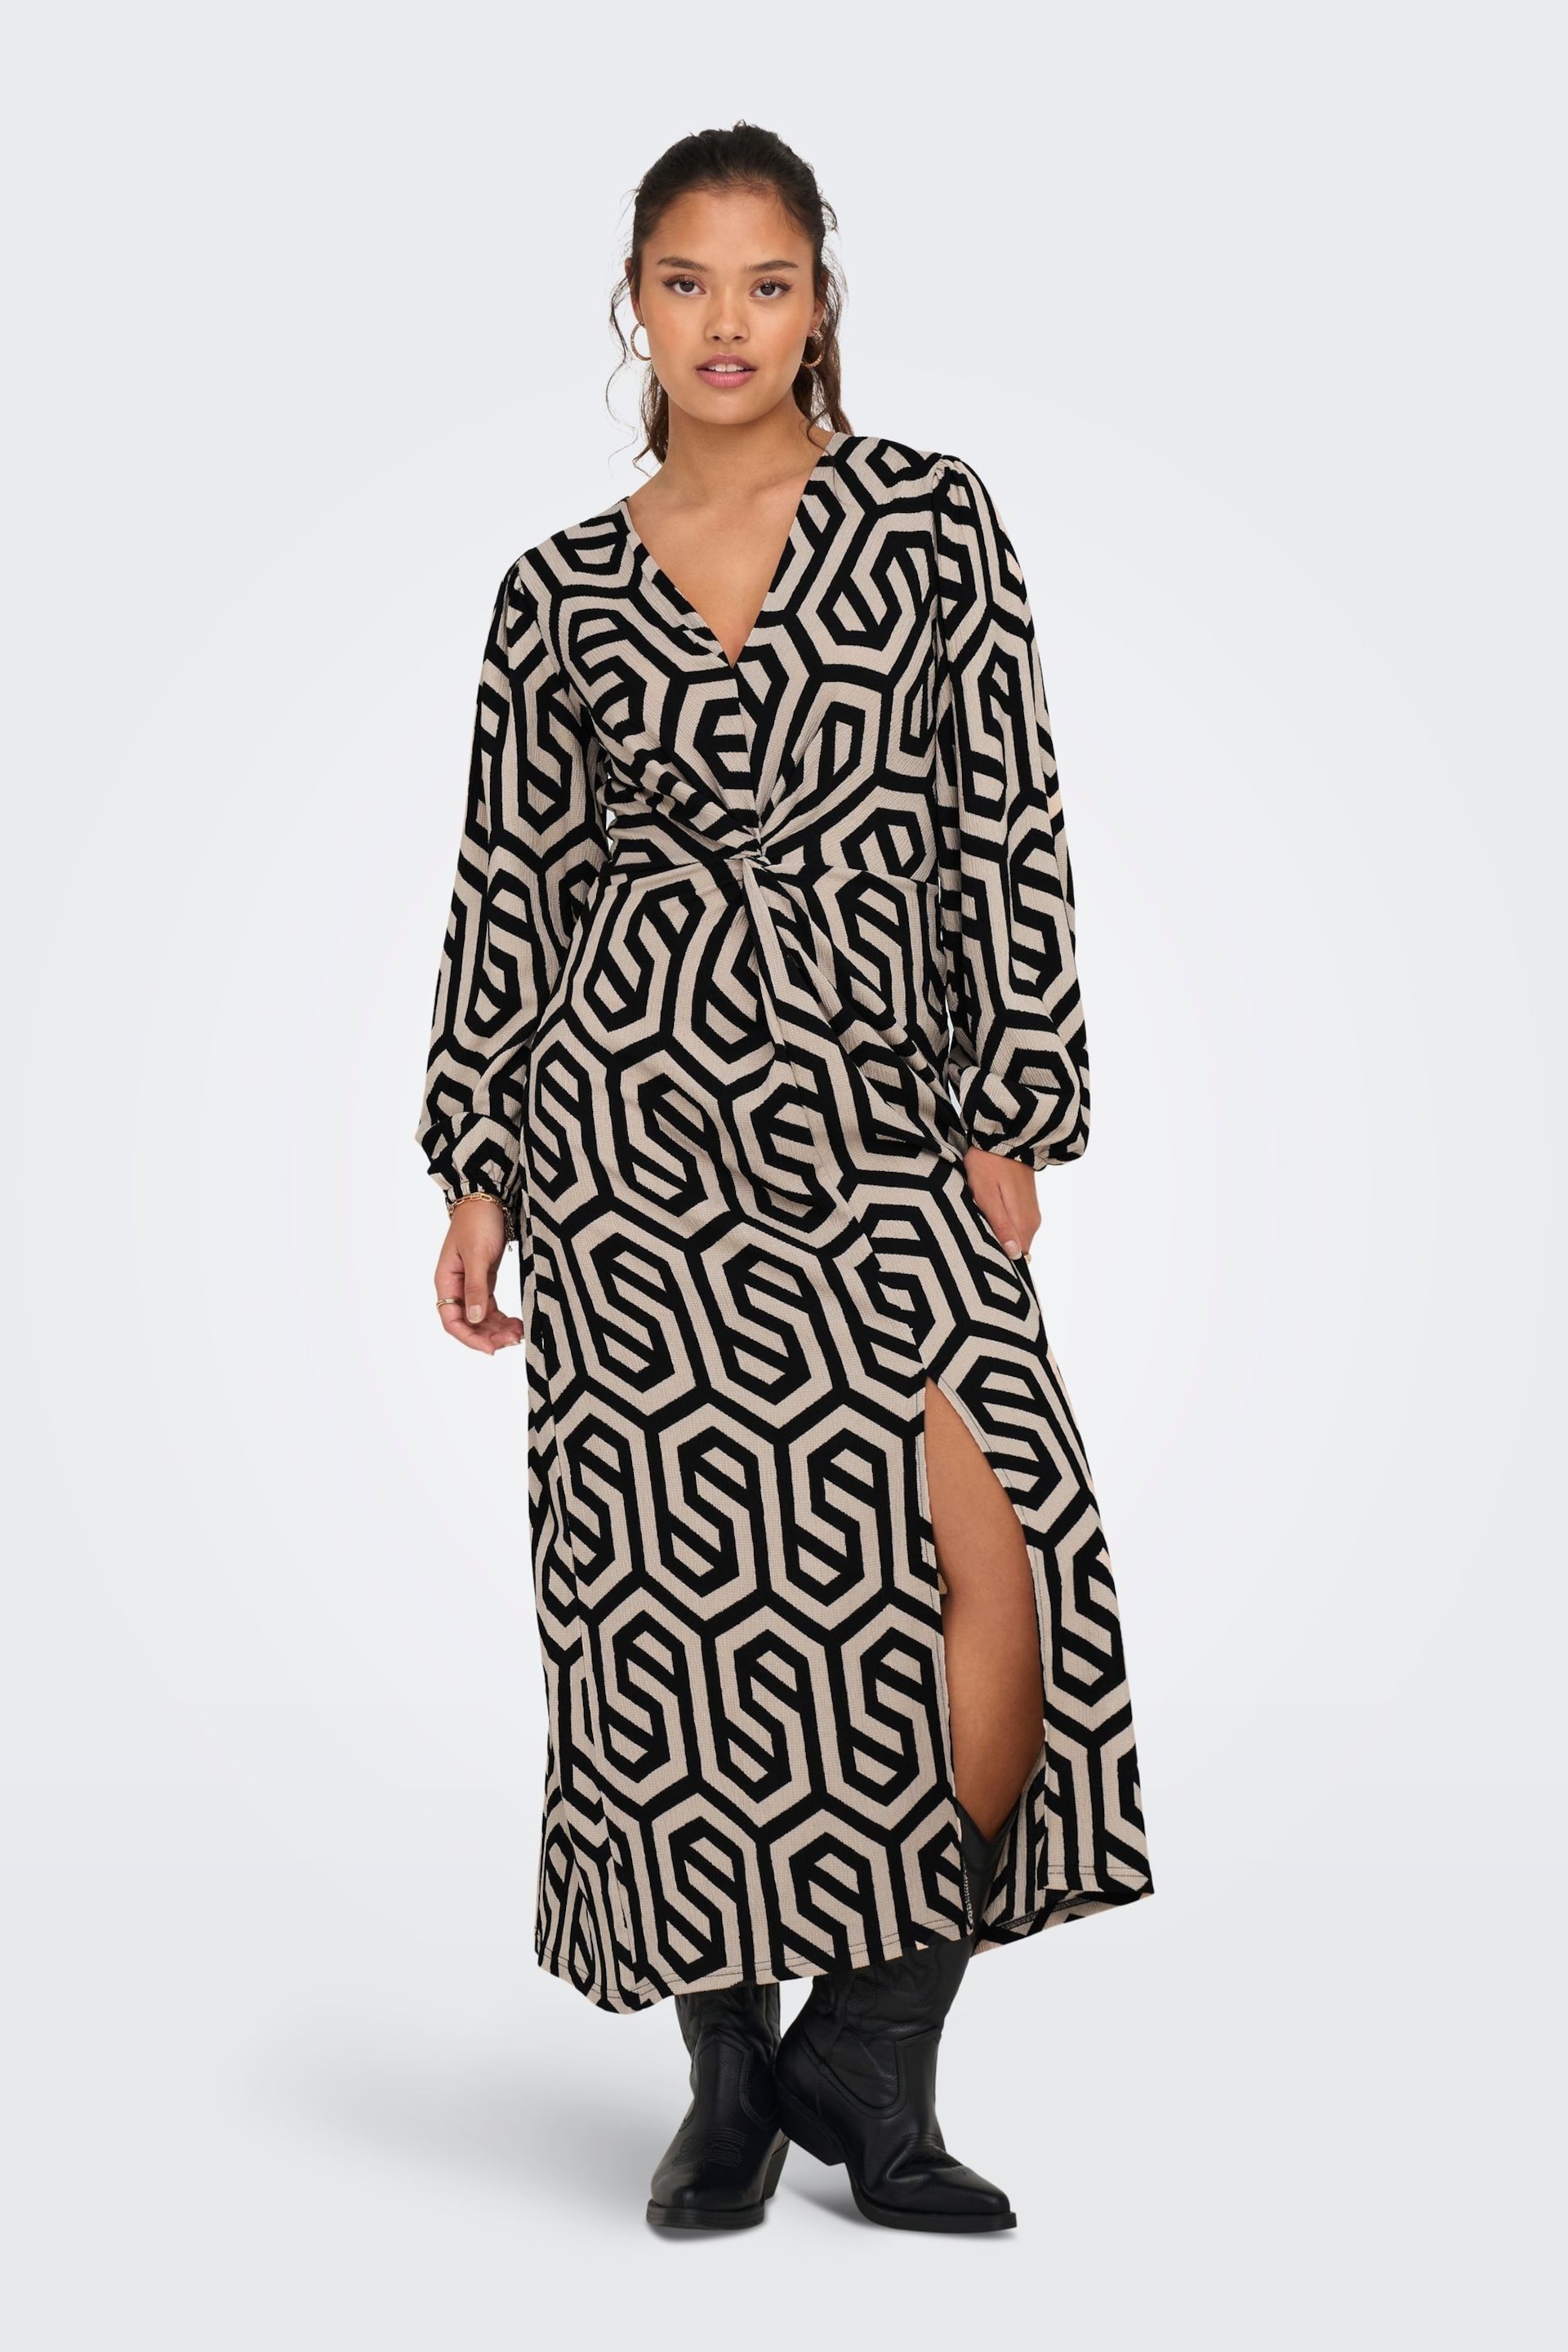 JDY Black Abstract Print V-Neck Midi Dress - Image 3 of 6